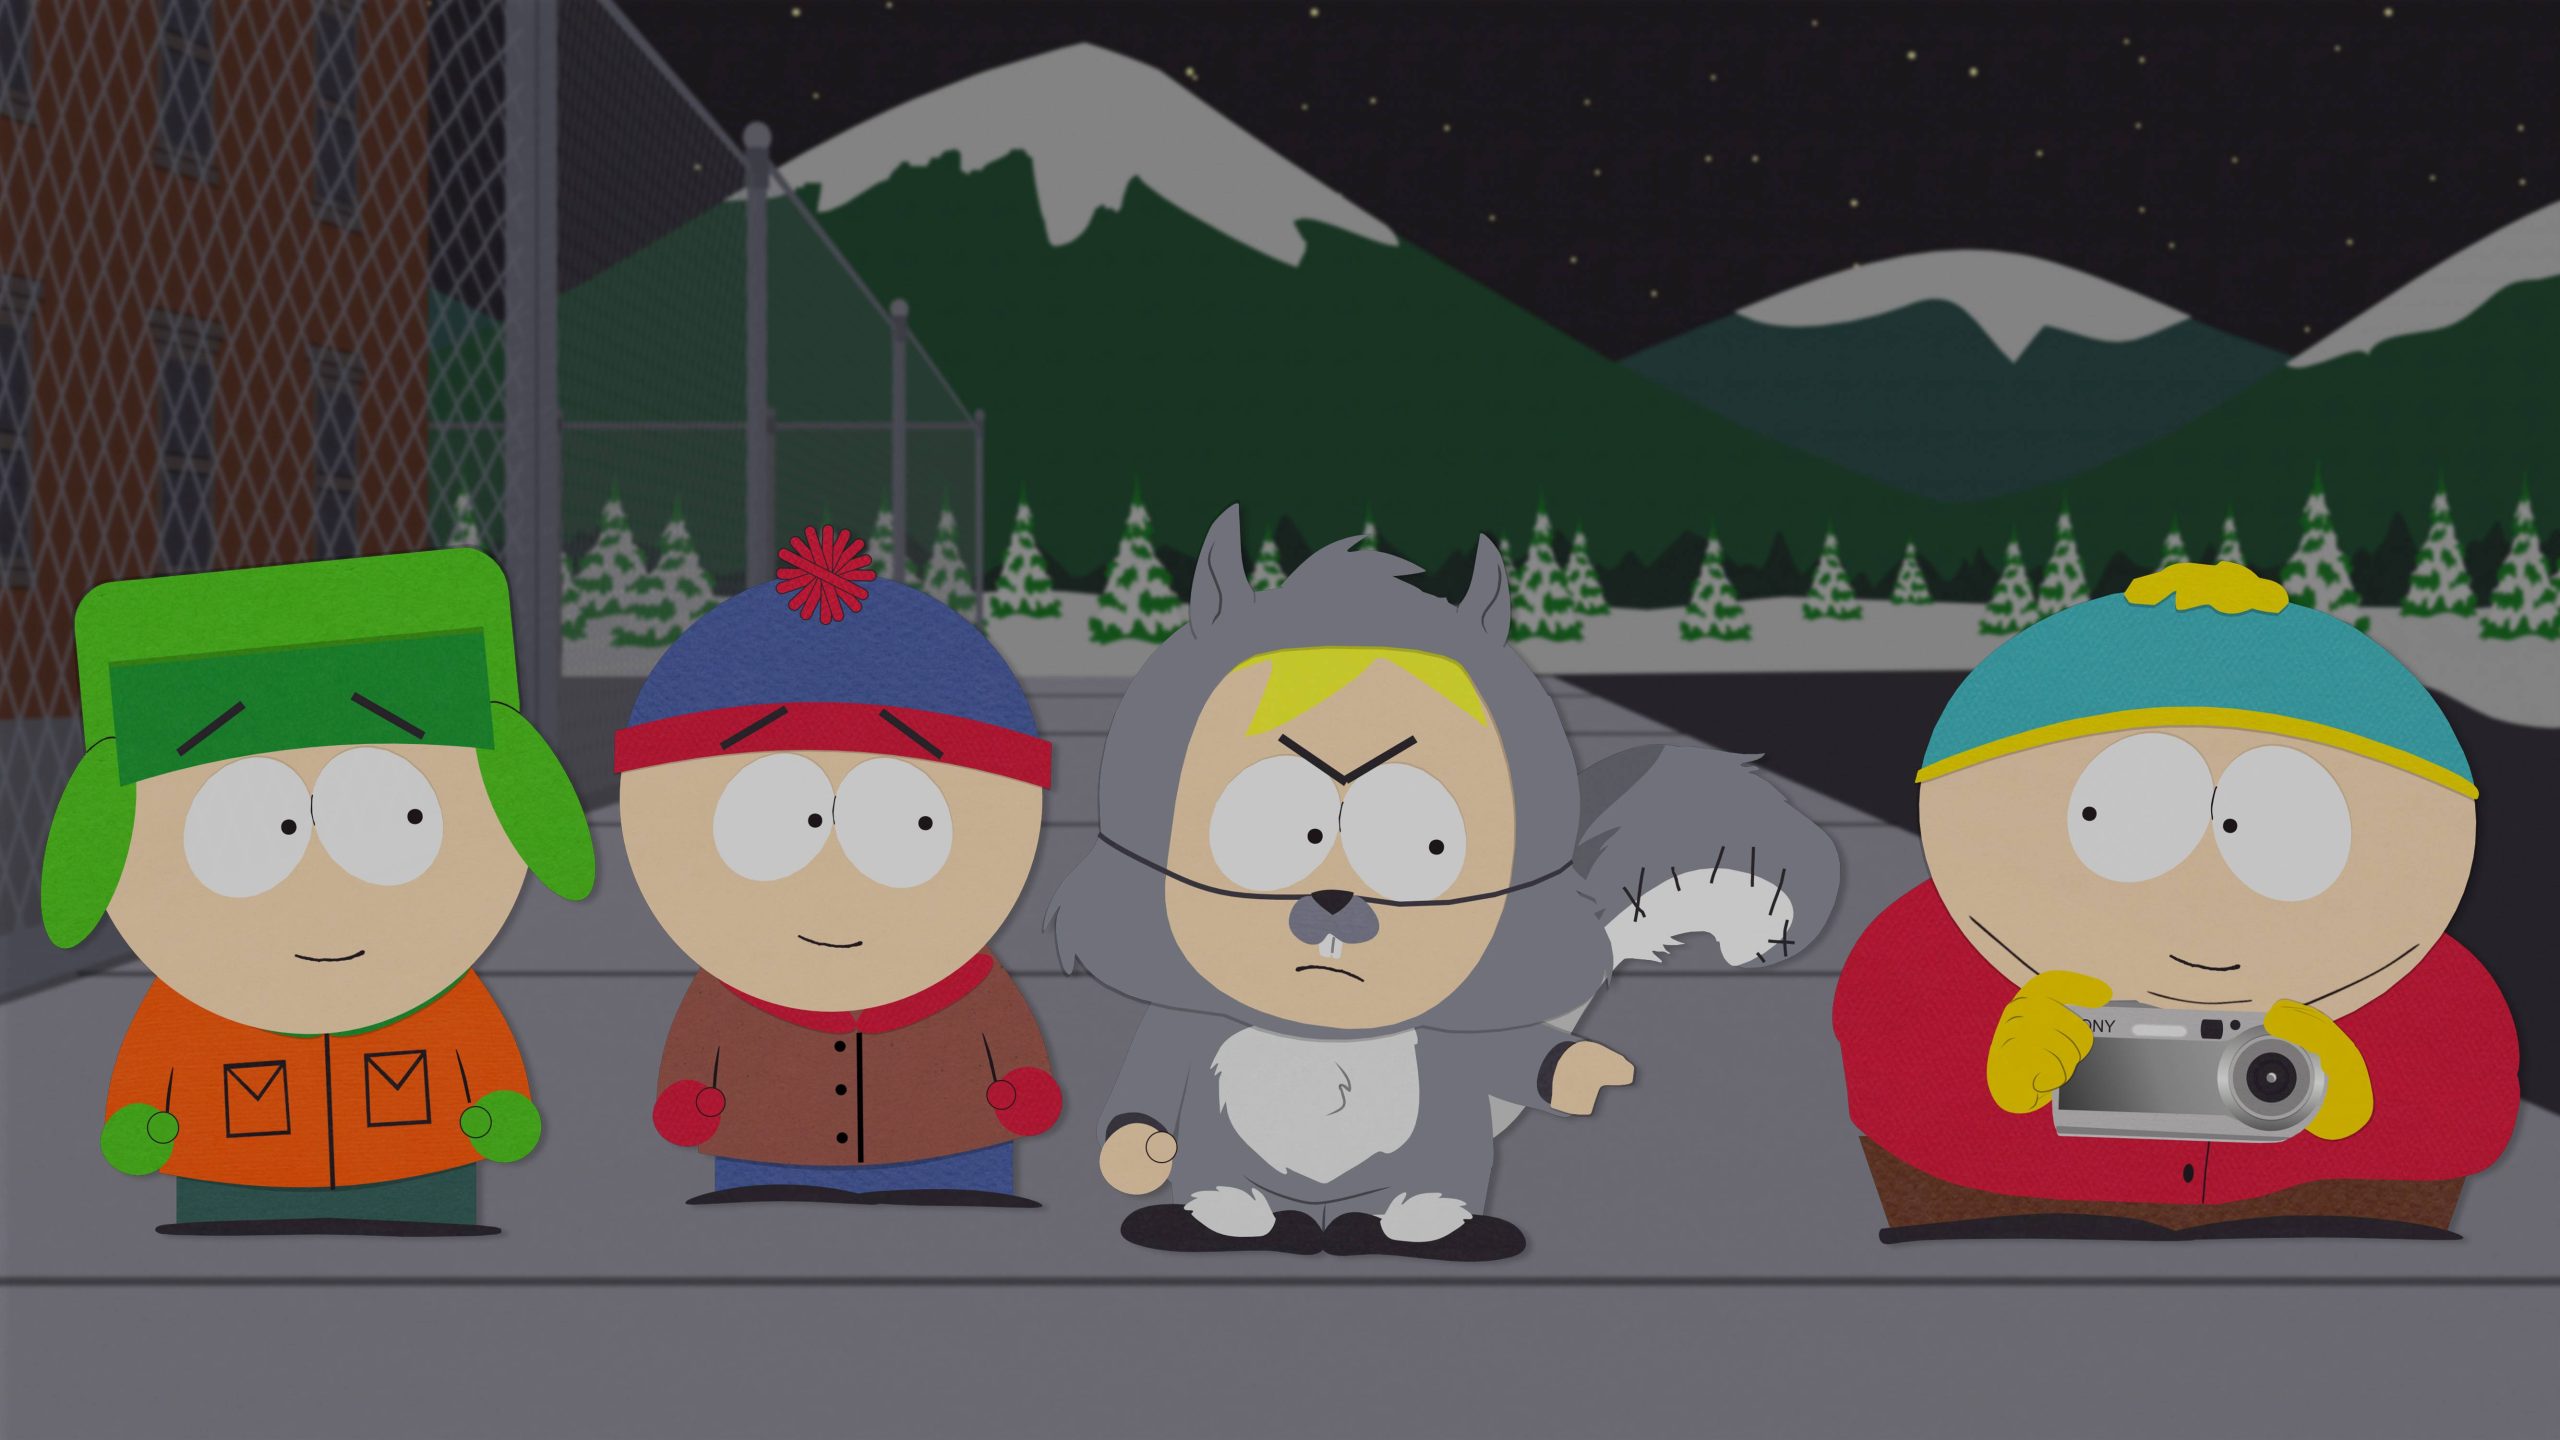 South Park Season 26 Episode 7 Release Date